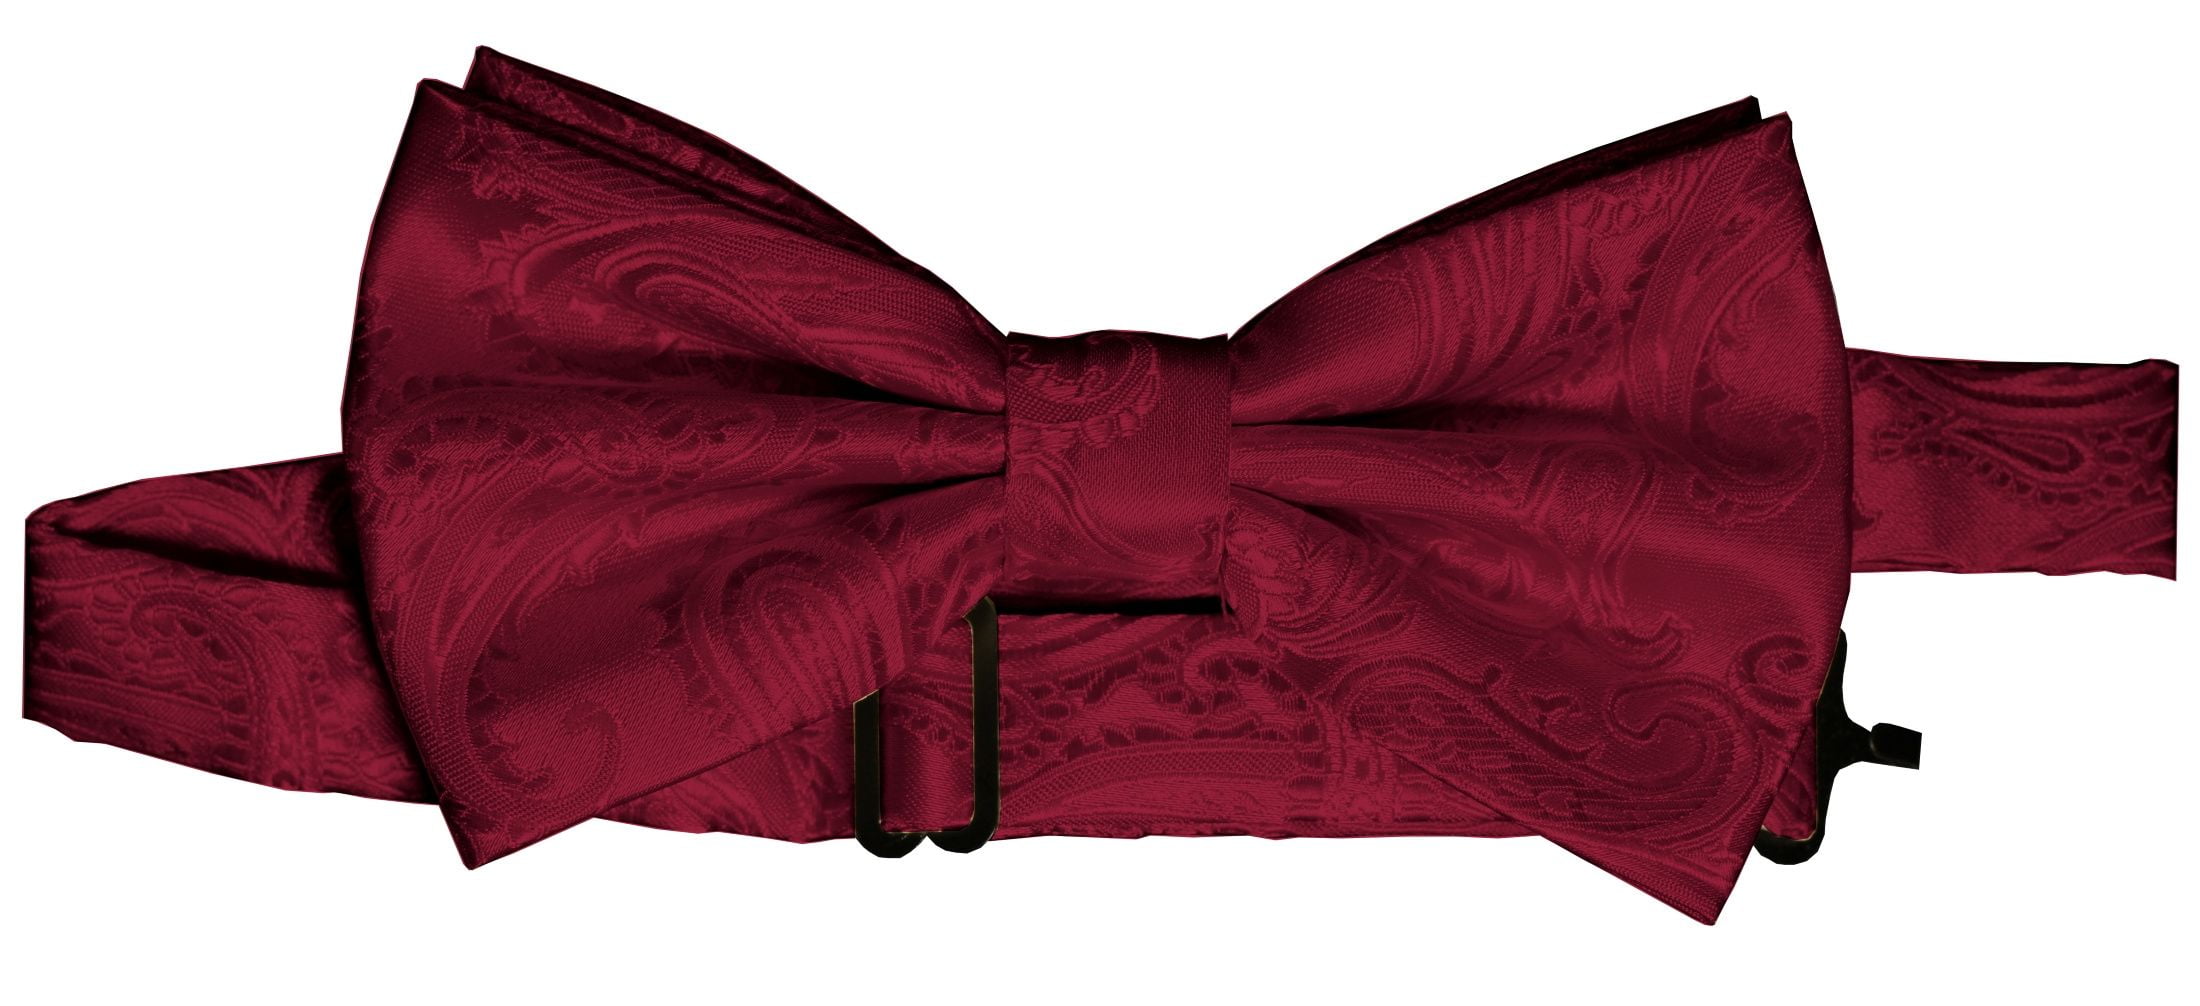 New Brand Q Men's micro fiber Self-tied Bow tie & Hankie Burgundy paisley 